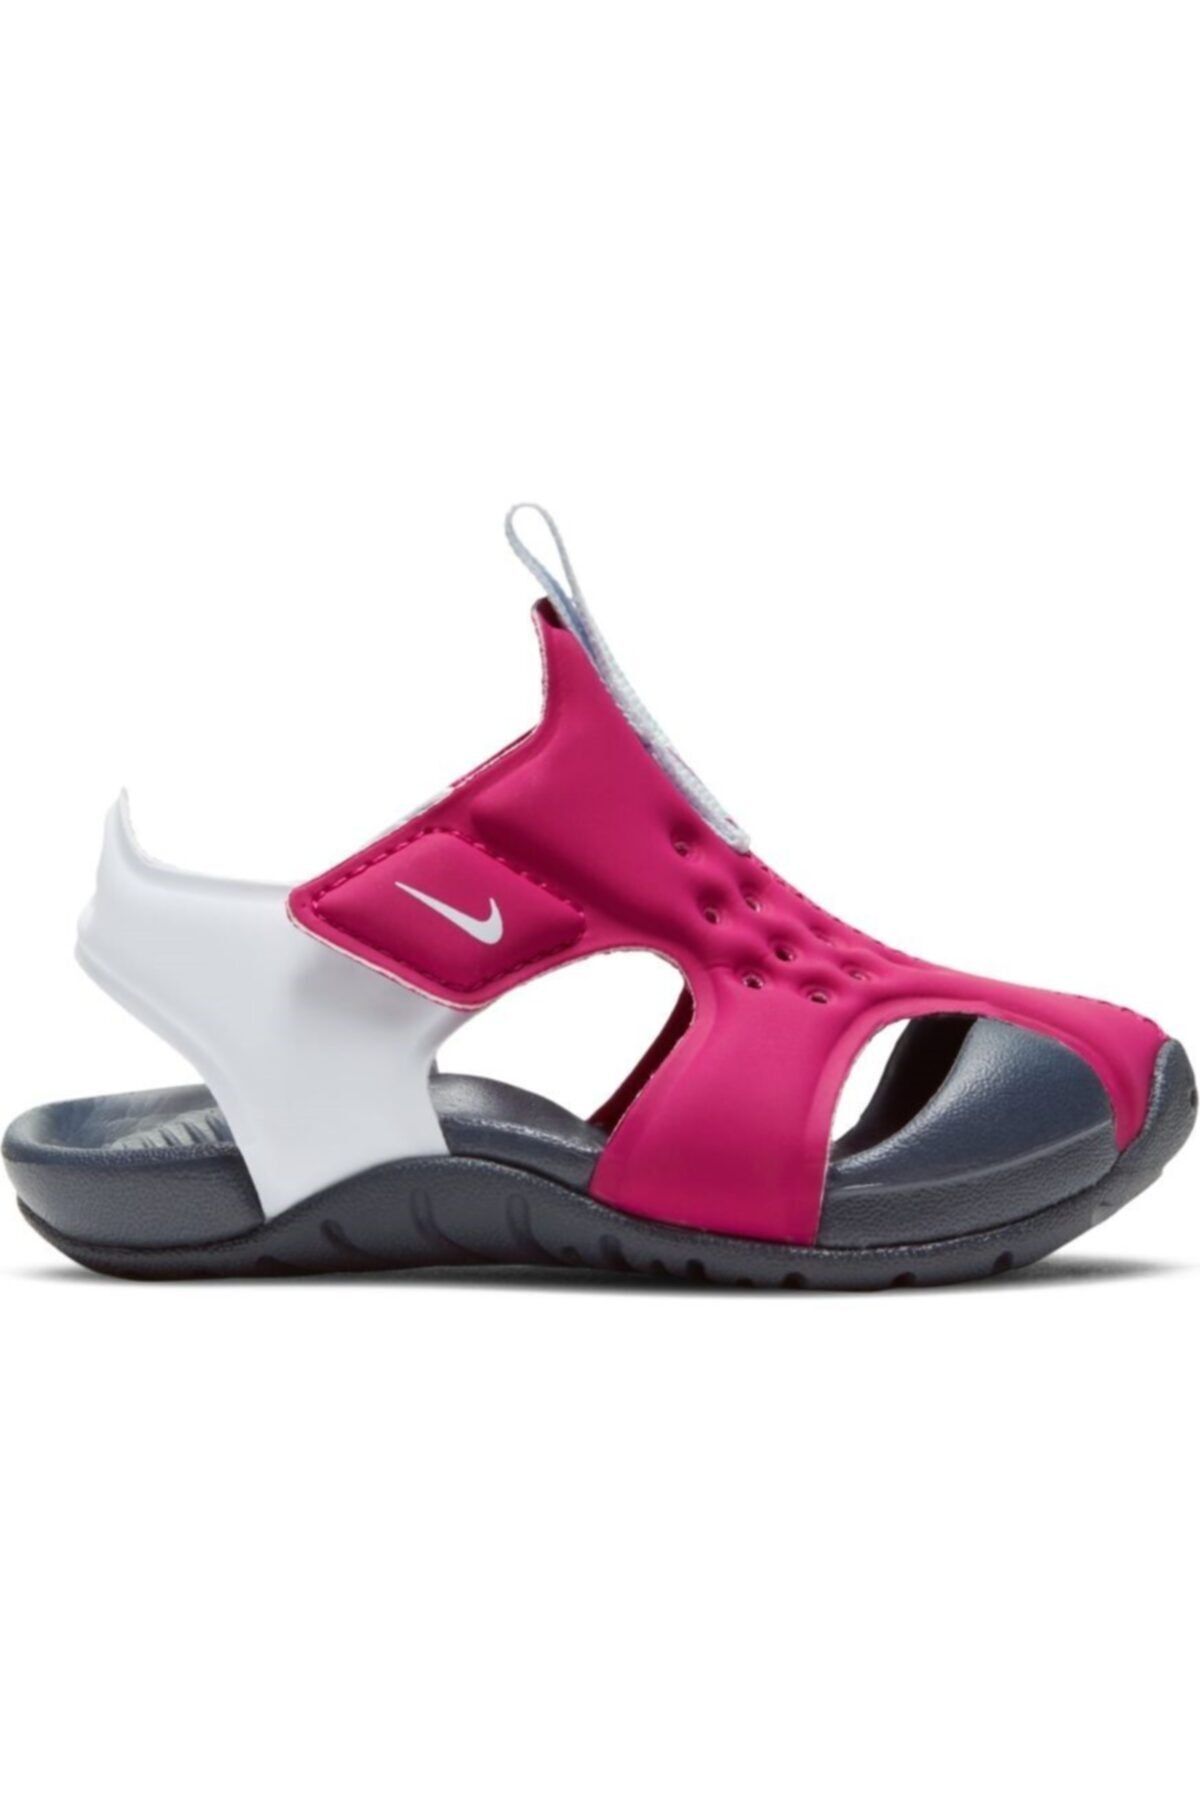 Nike Unisex Child Pink Sunray از 2 TD Sandals محافظت می کند